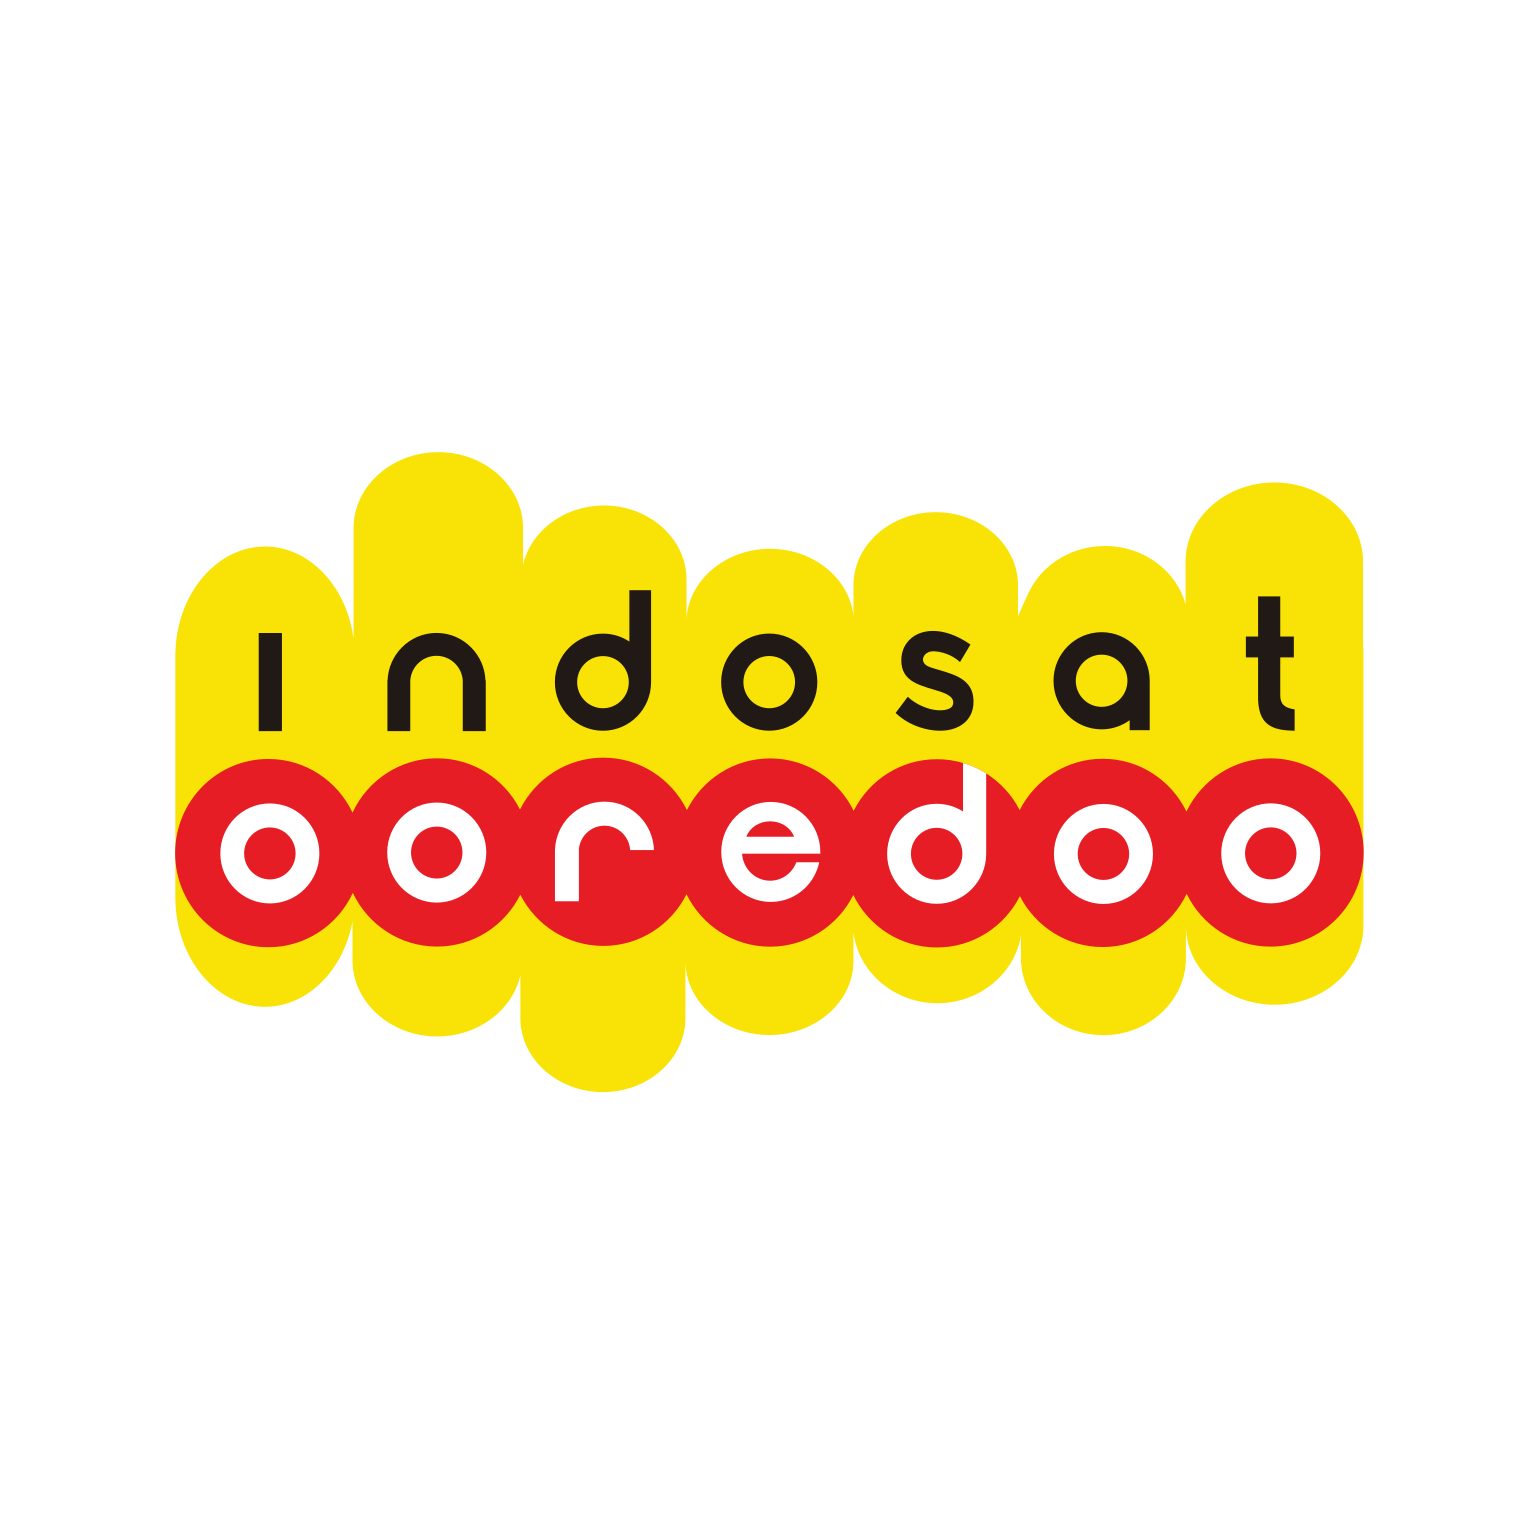 Unlock Indosat Ooredoo (StarOne) Indonesia Phone